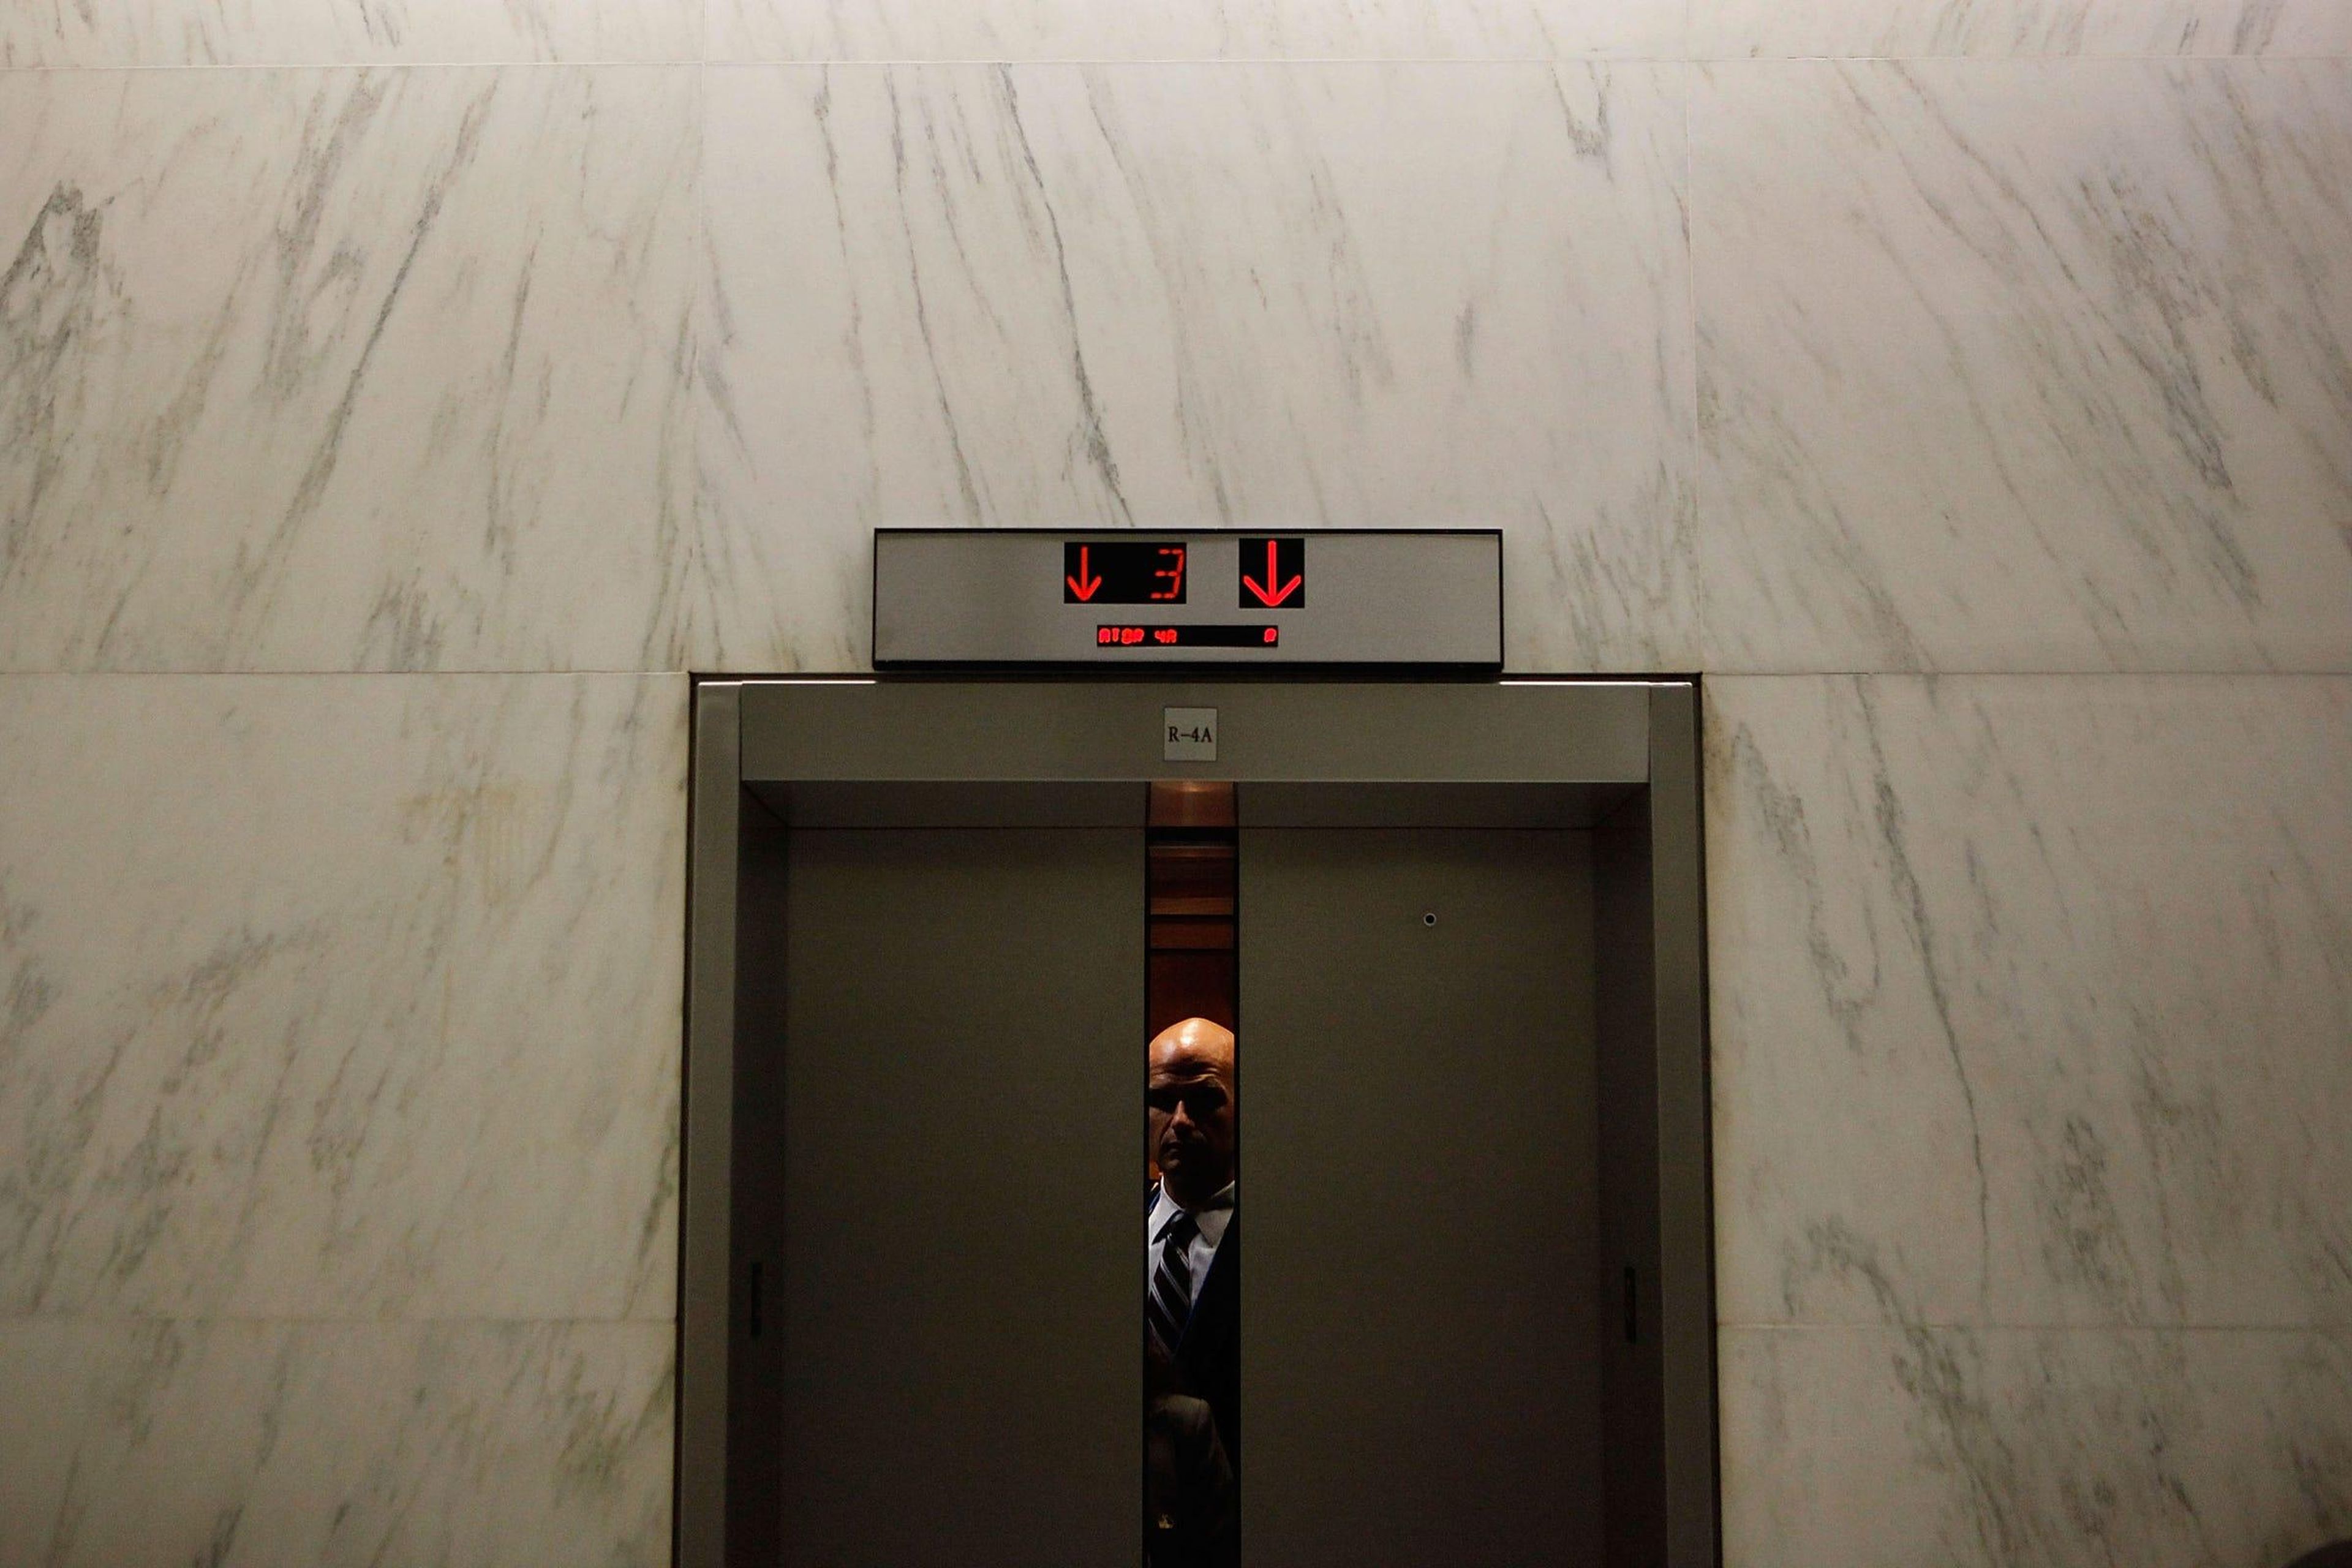 A man riding an office elevator.